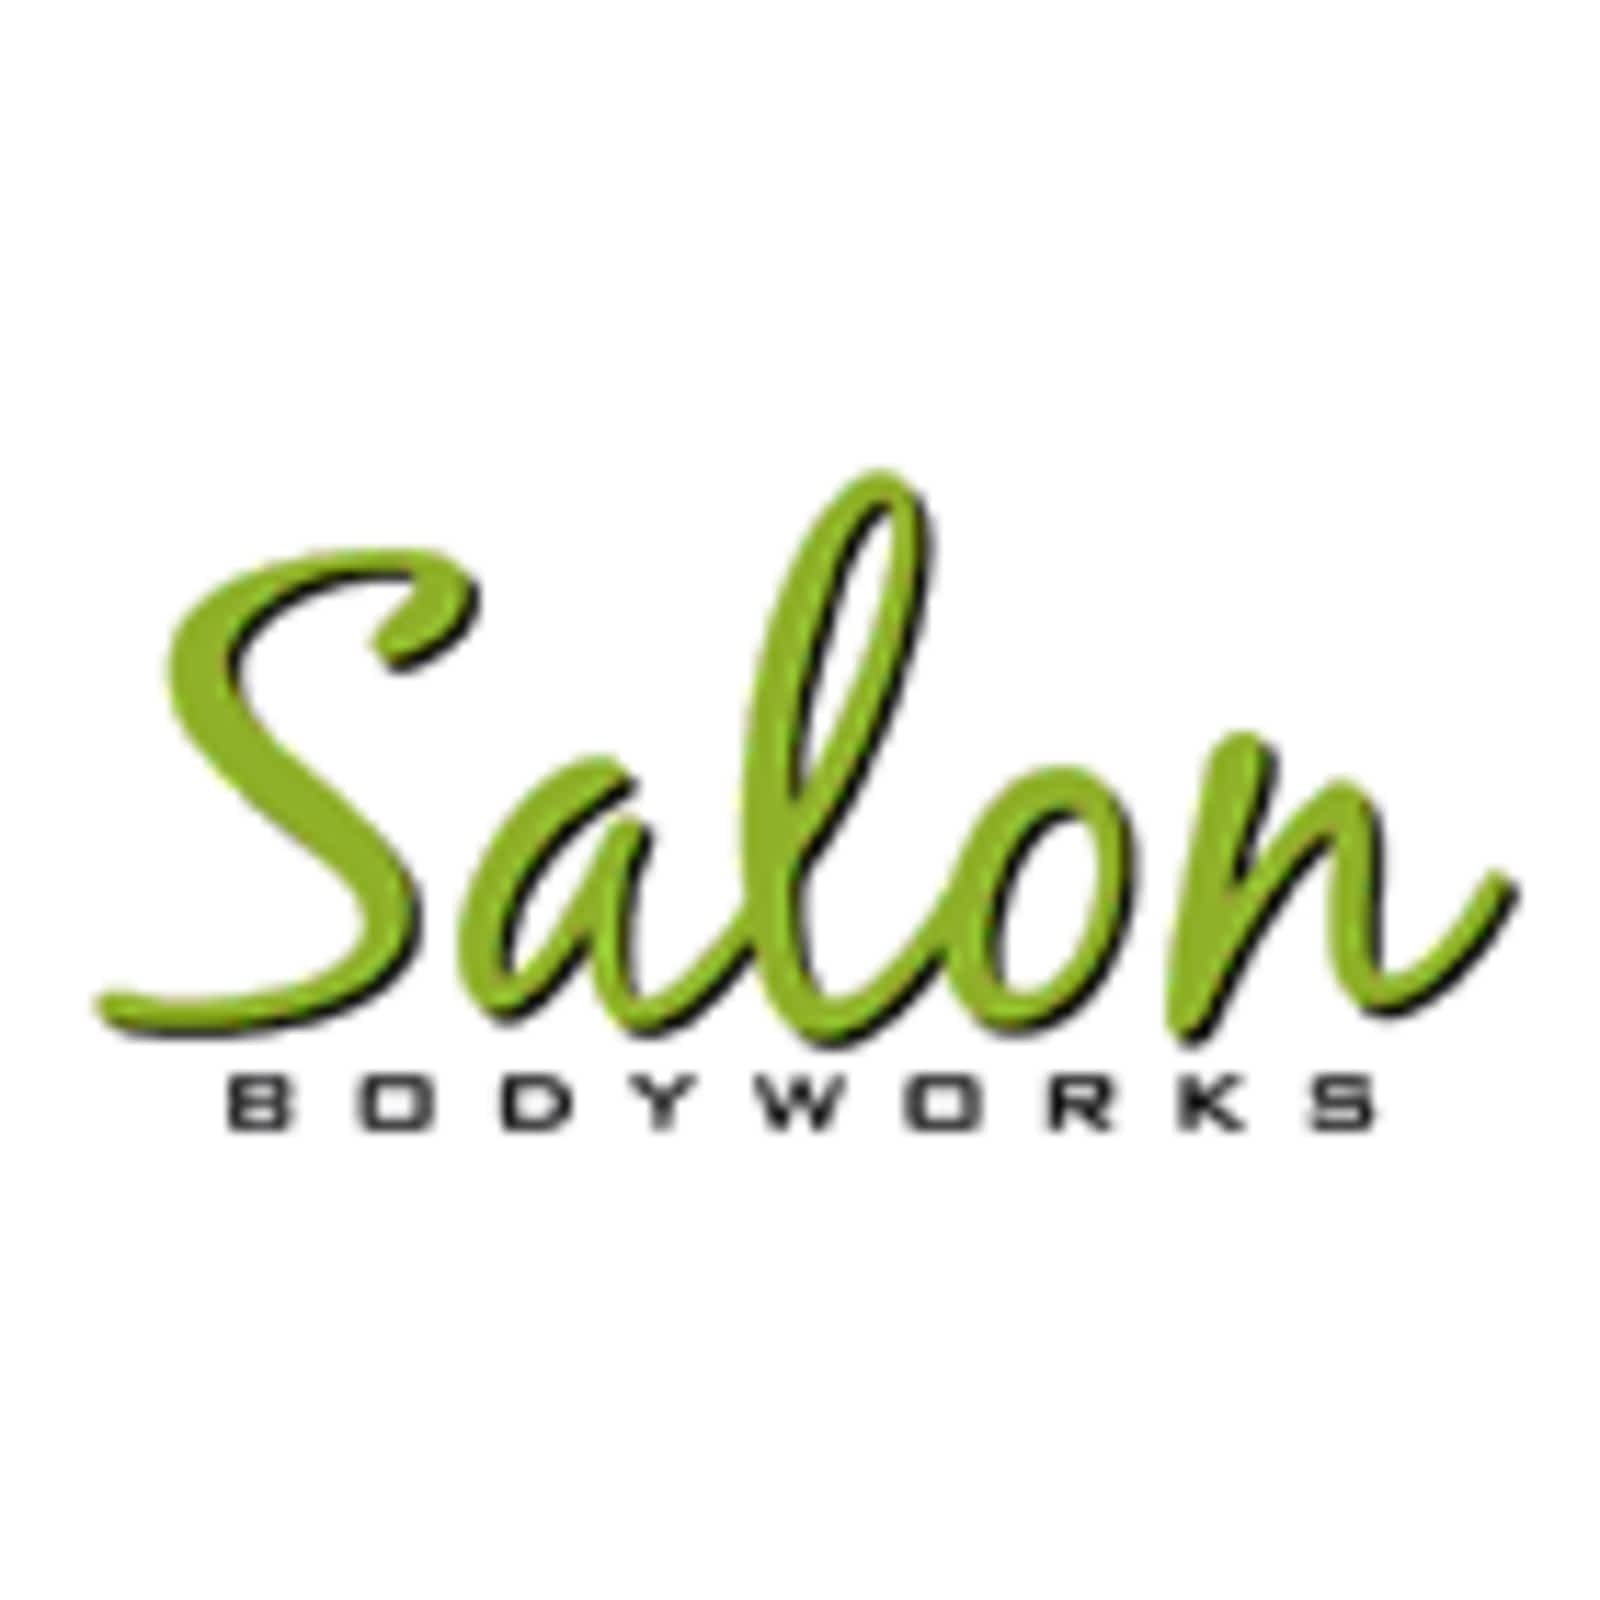 Salon Bodyworks